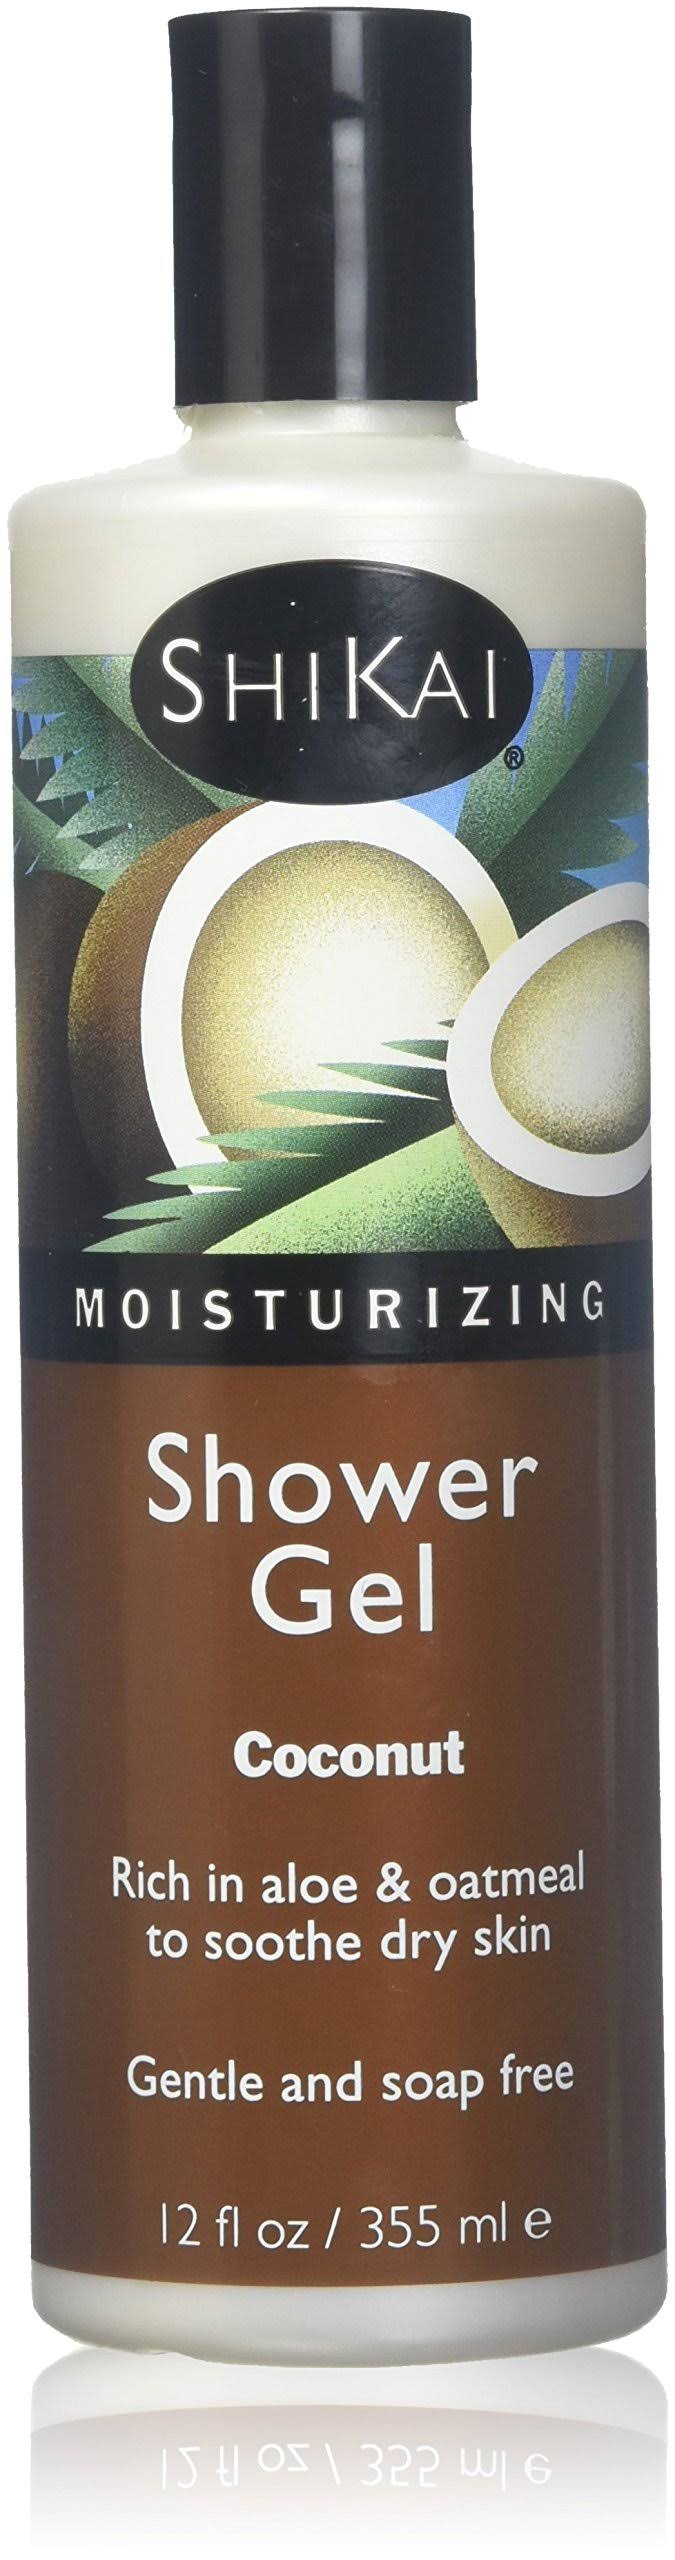 Shikai All-Natural Moisturizing Shower Gel - Coconut